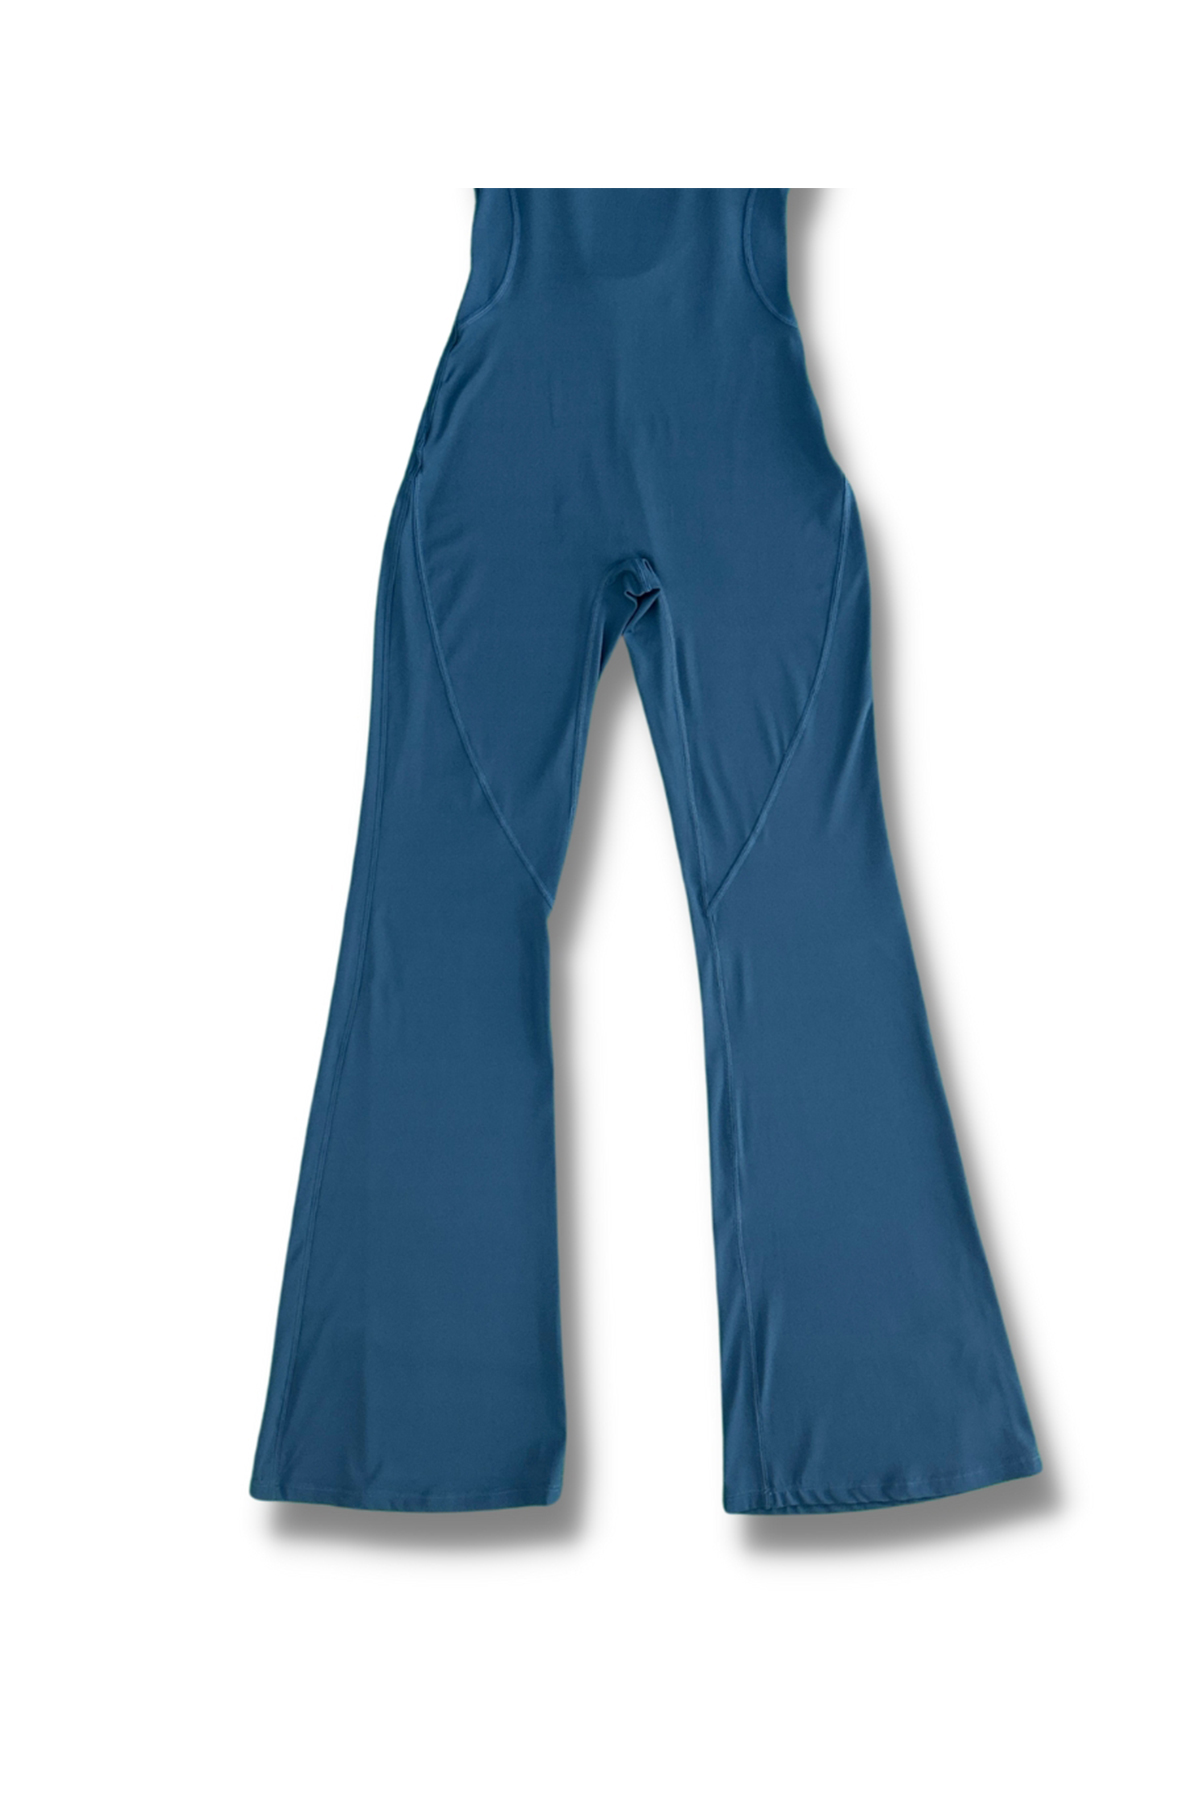 Flare-Leg-Activewear-Jumpsuit-blue-back